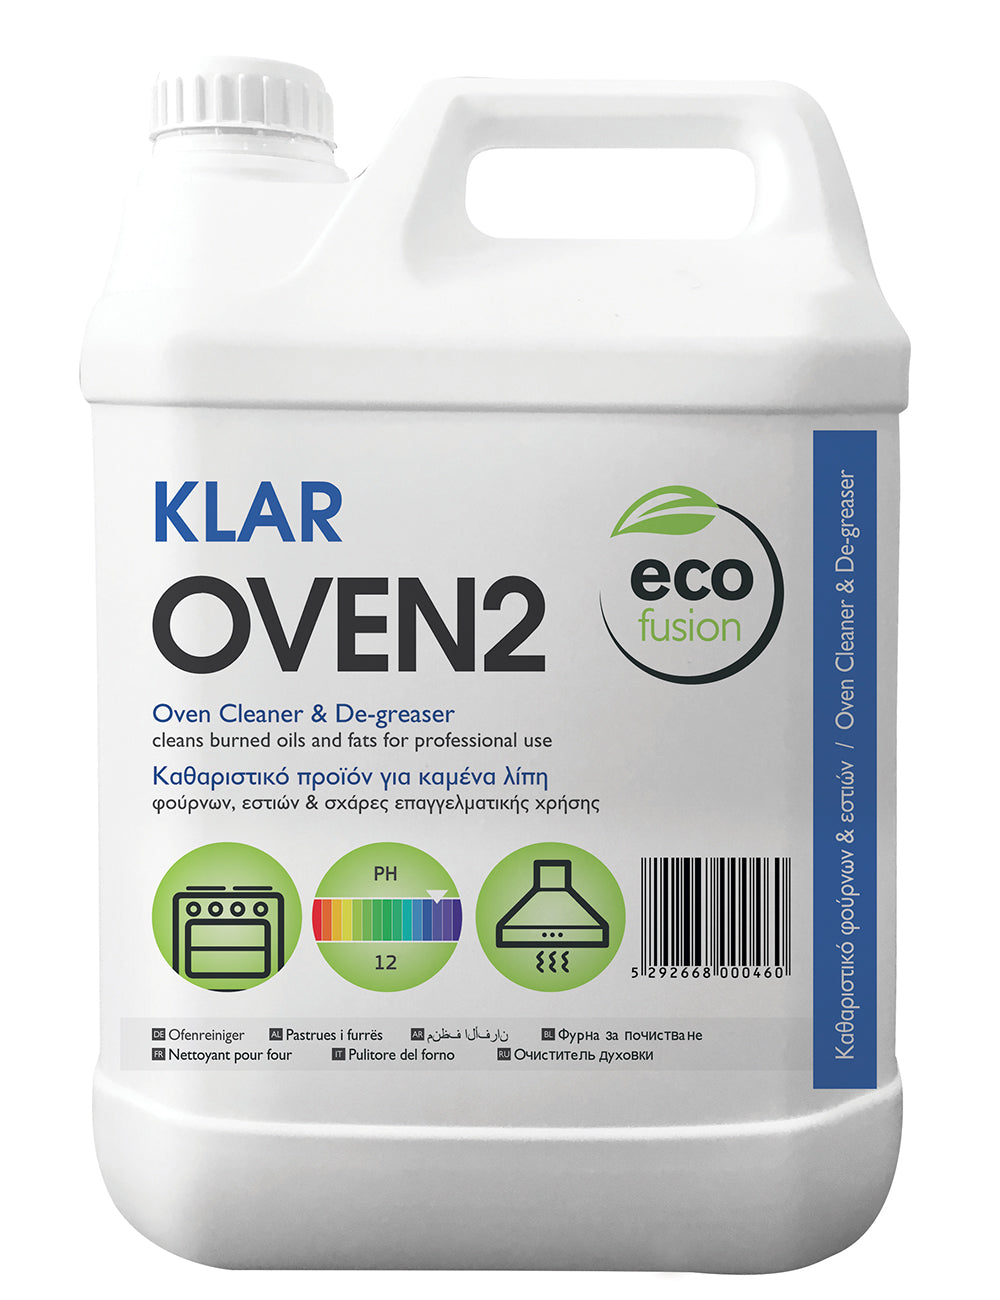 KLAR OVEN2 - Oven cleaner detergent - 5L